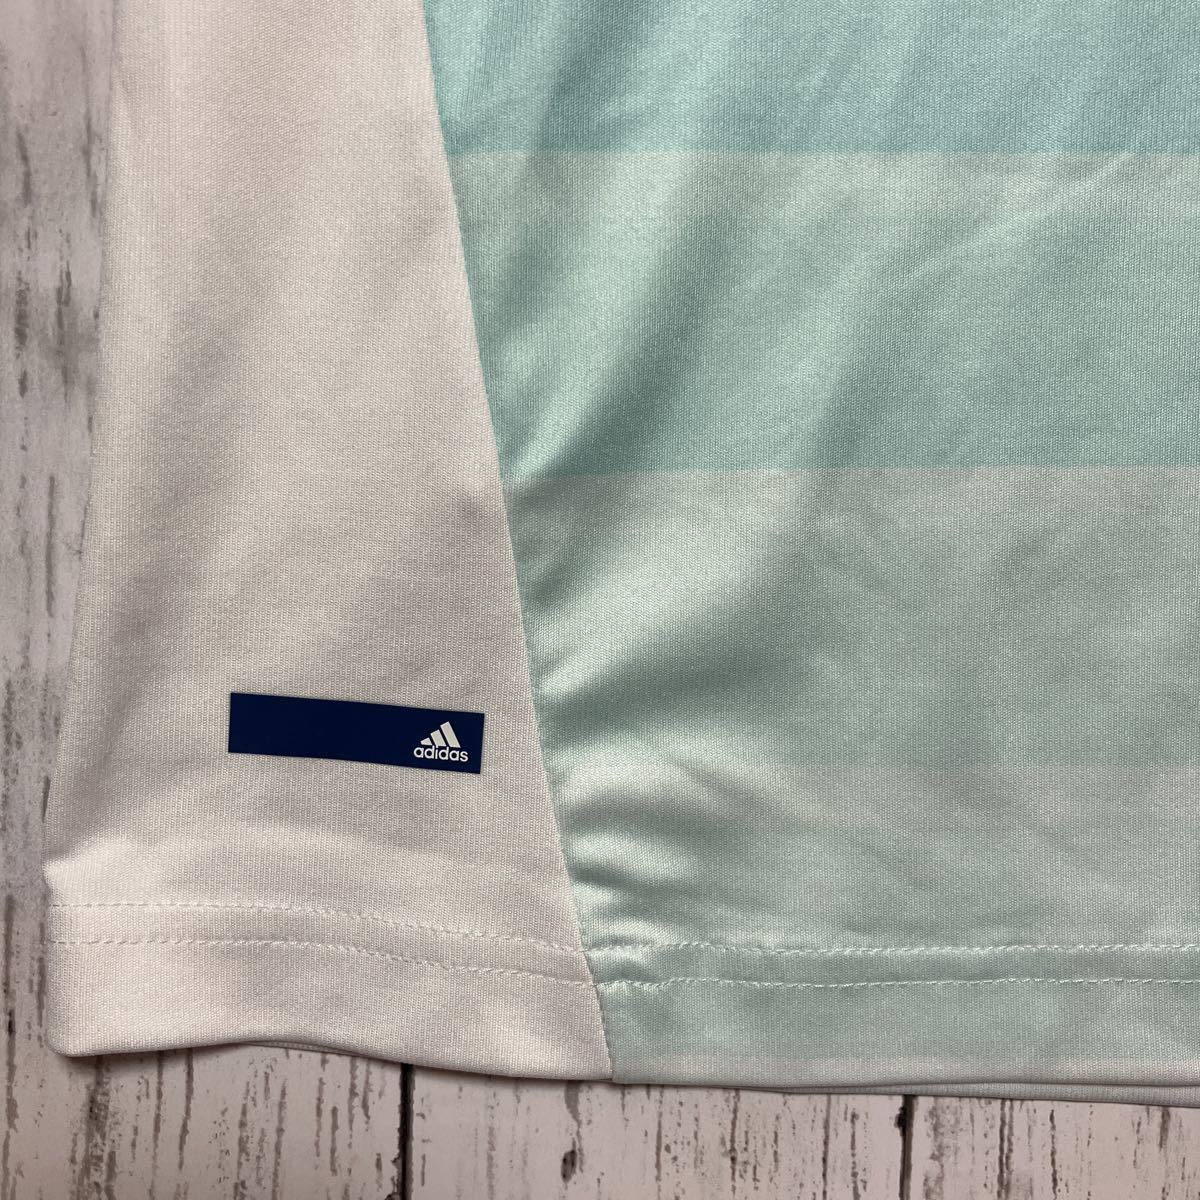 【adidas golf】 アディダスゴルフ メンズ 半袖ポロシャツ M (US・S) 水色 ストレッチ素材 送料無料